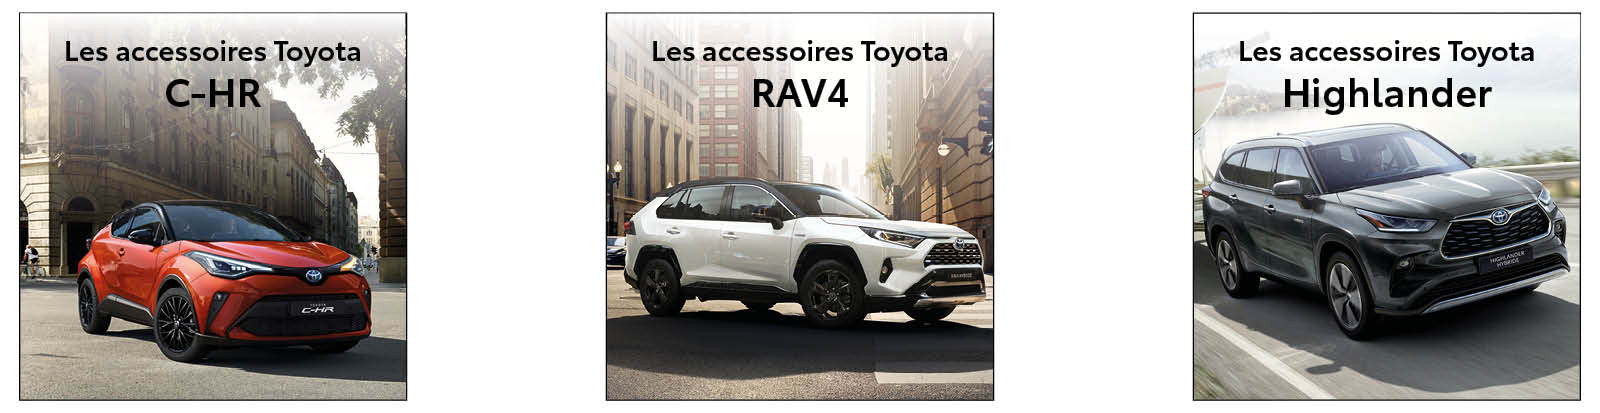 Les accessoires Toyota RAV4 TOYOTA PARIS 17